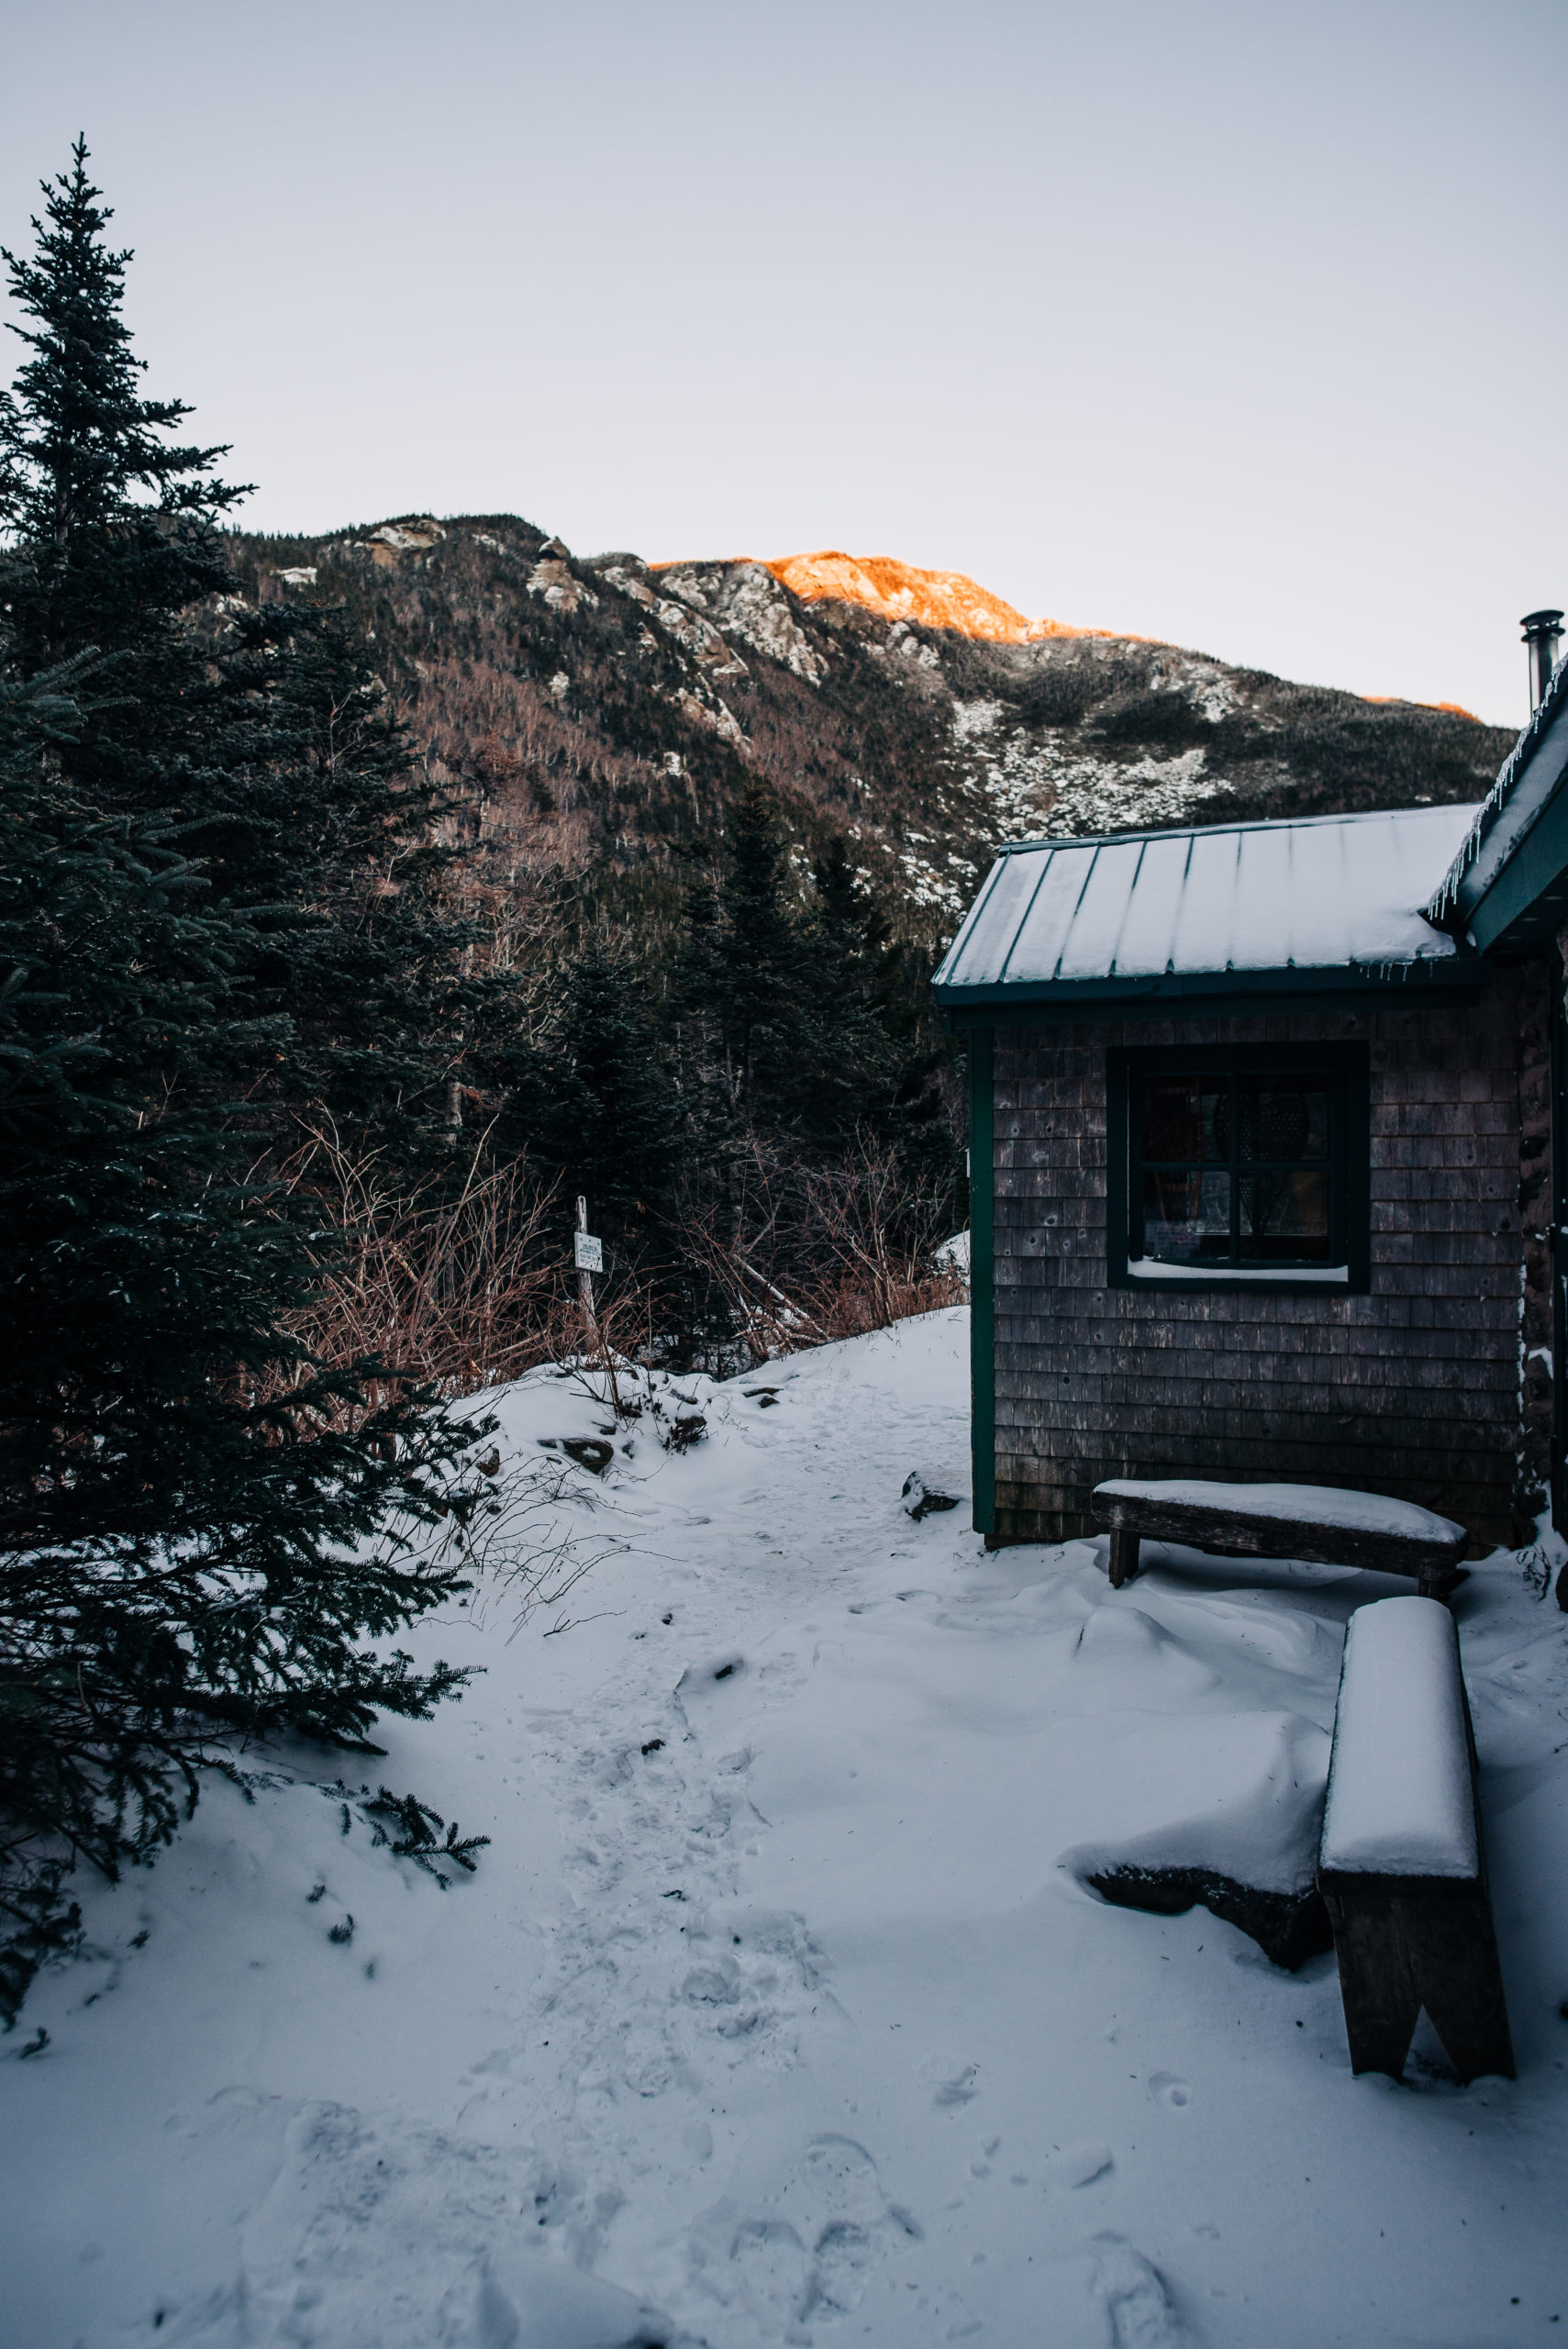 AMC Carter Notch Hut, White Mountain National Forest, New Hampshire-- Photo by Corey David Photography.